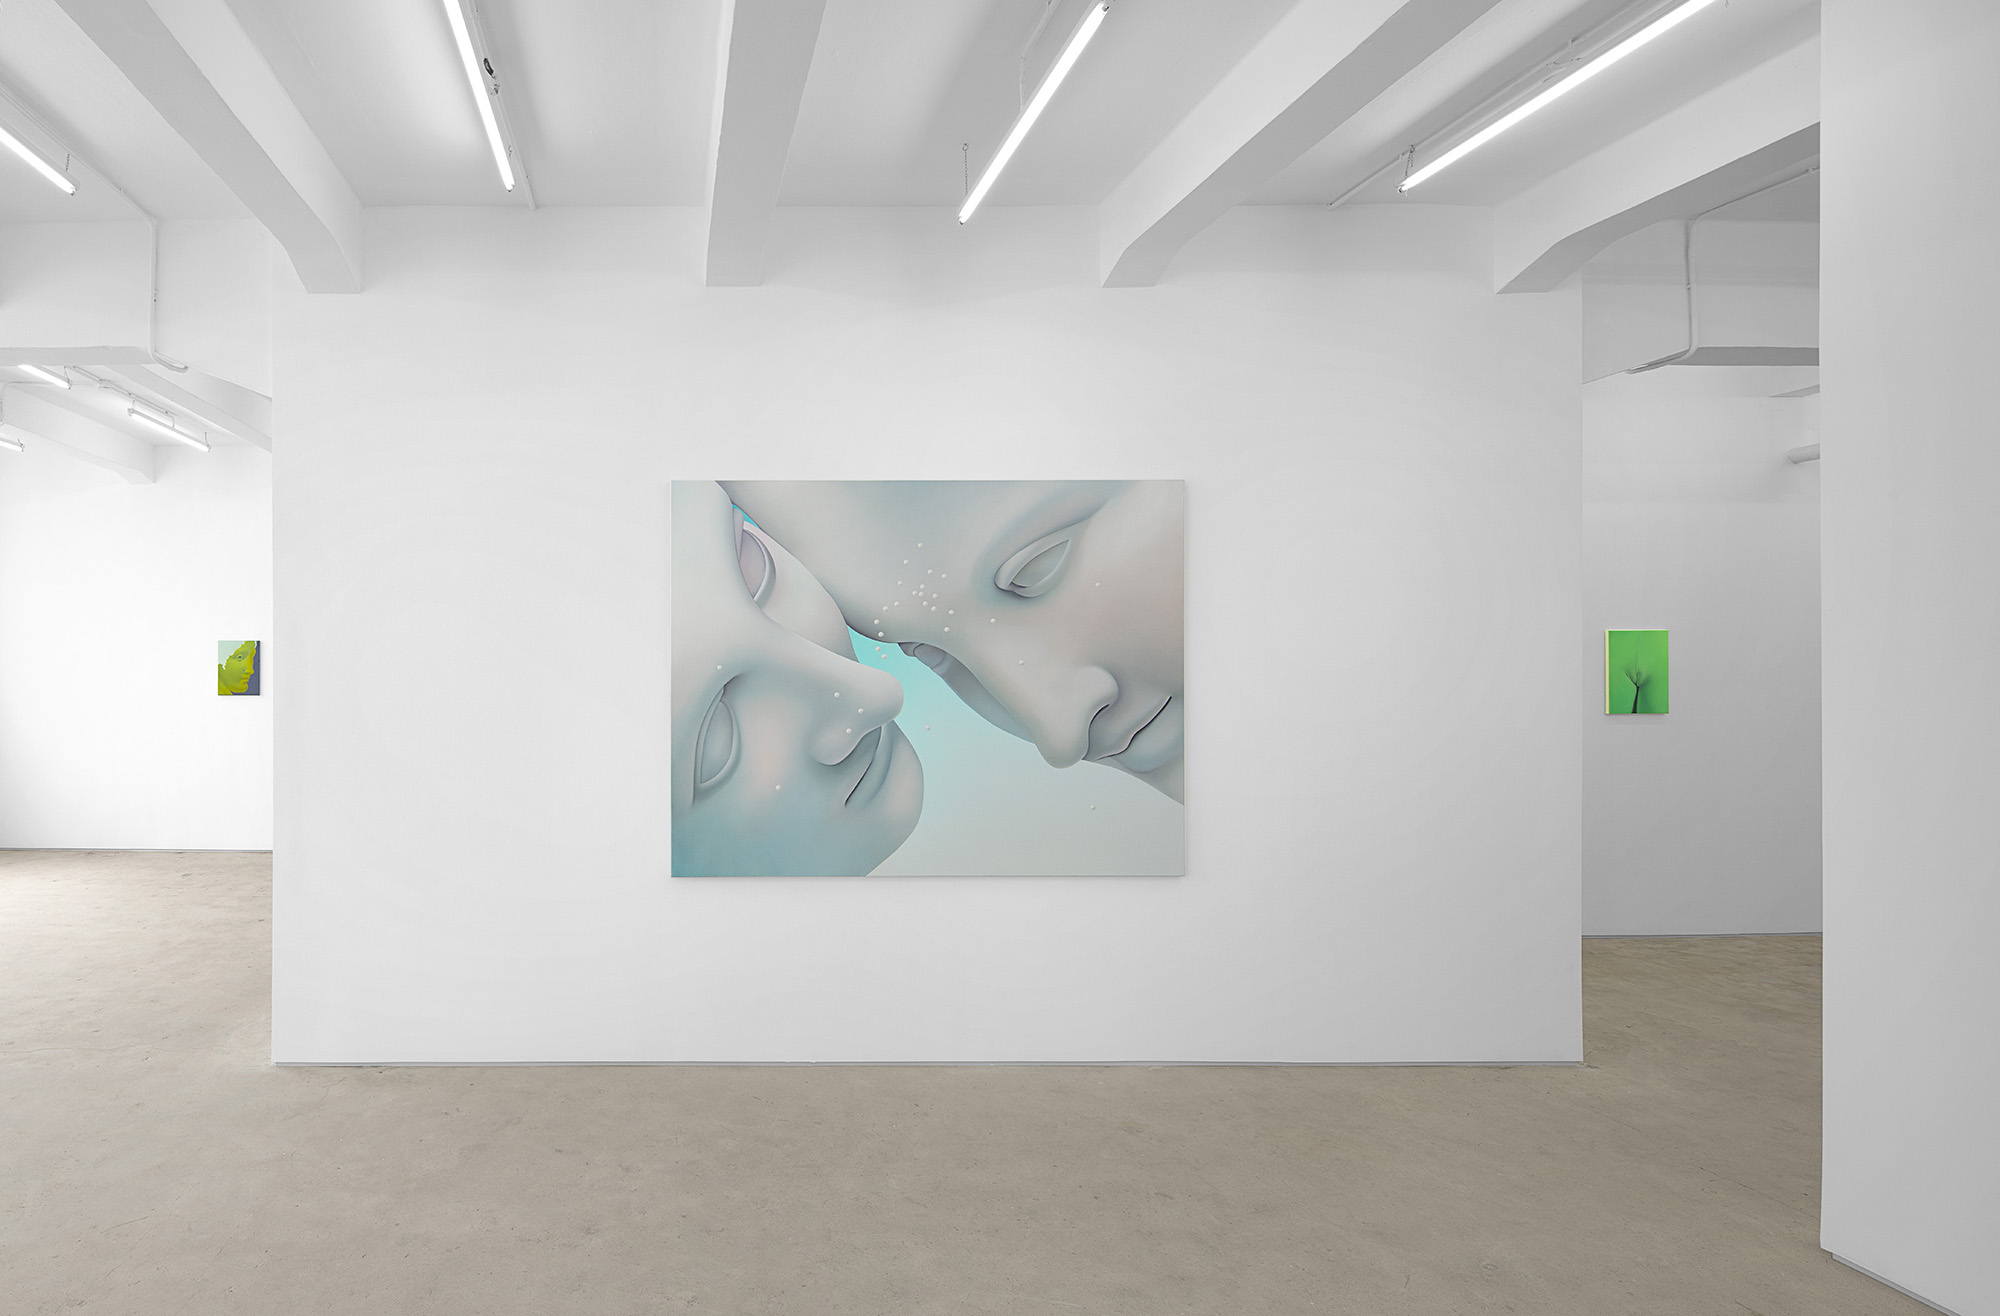 Vivian Greven, The Negatives, solo exhibition at Gallery Vacancy, installation view 16